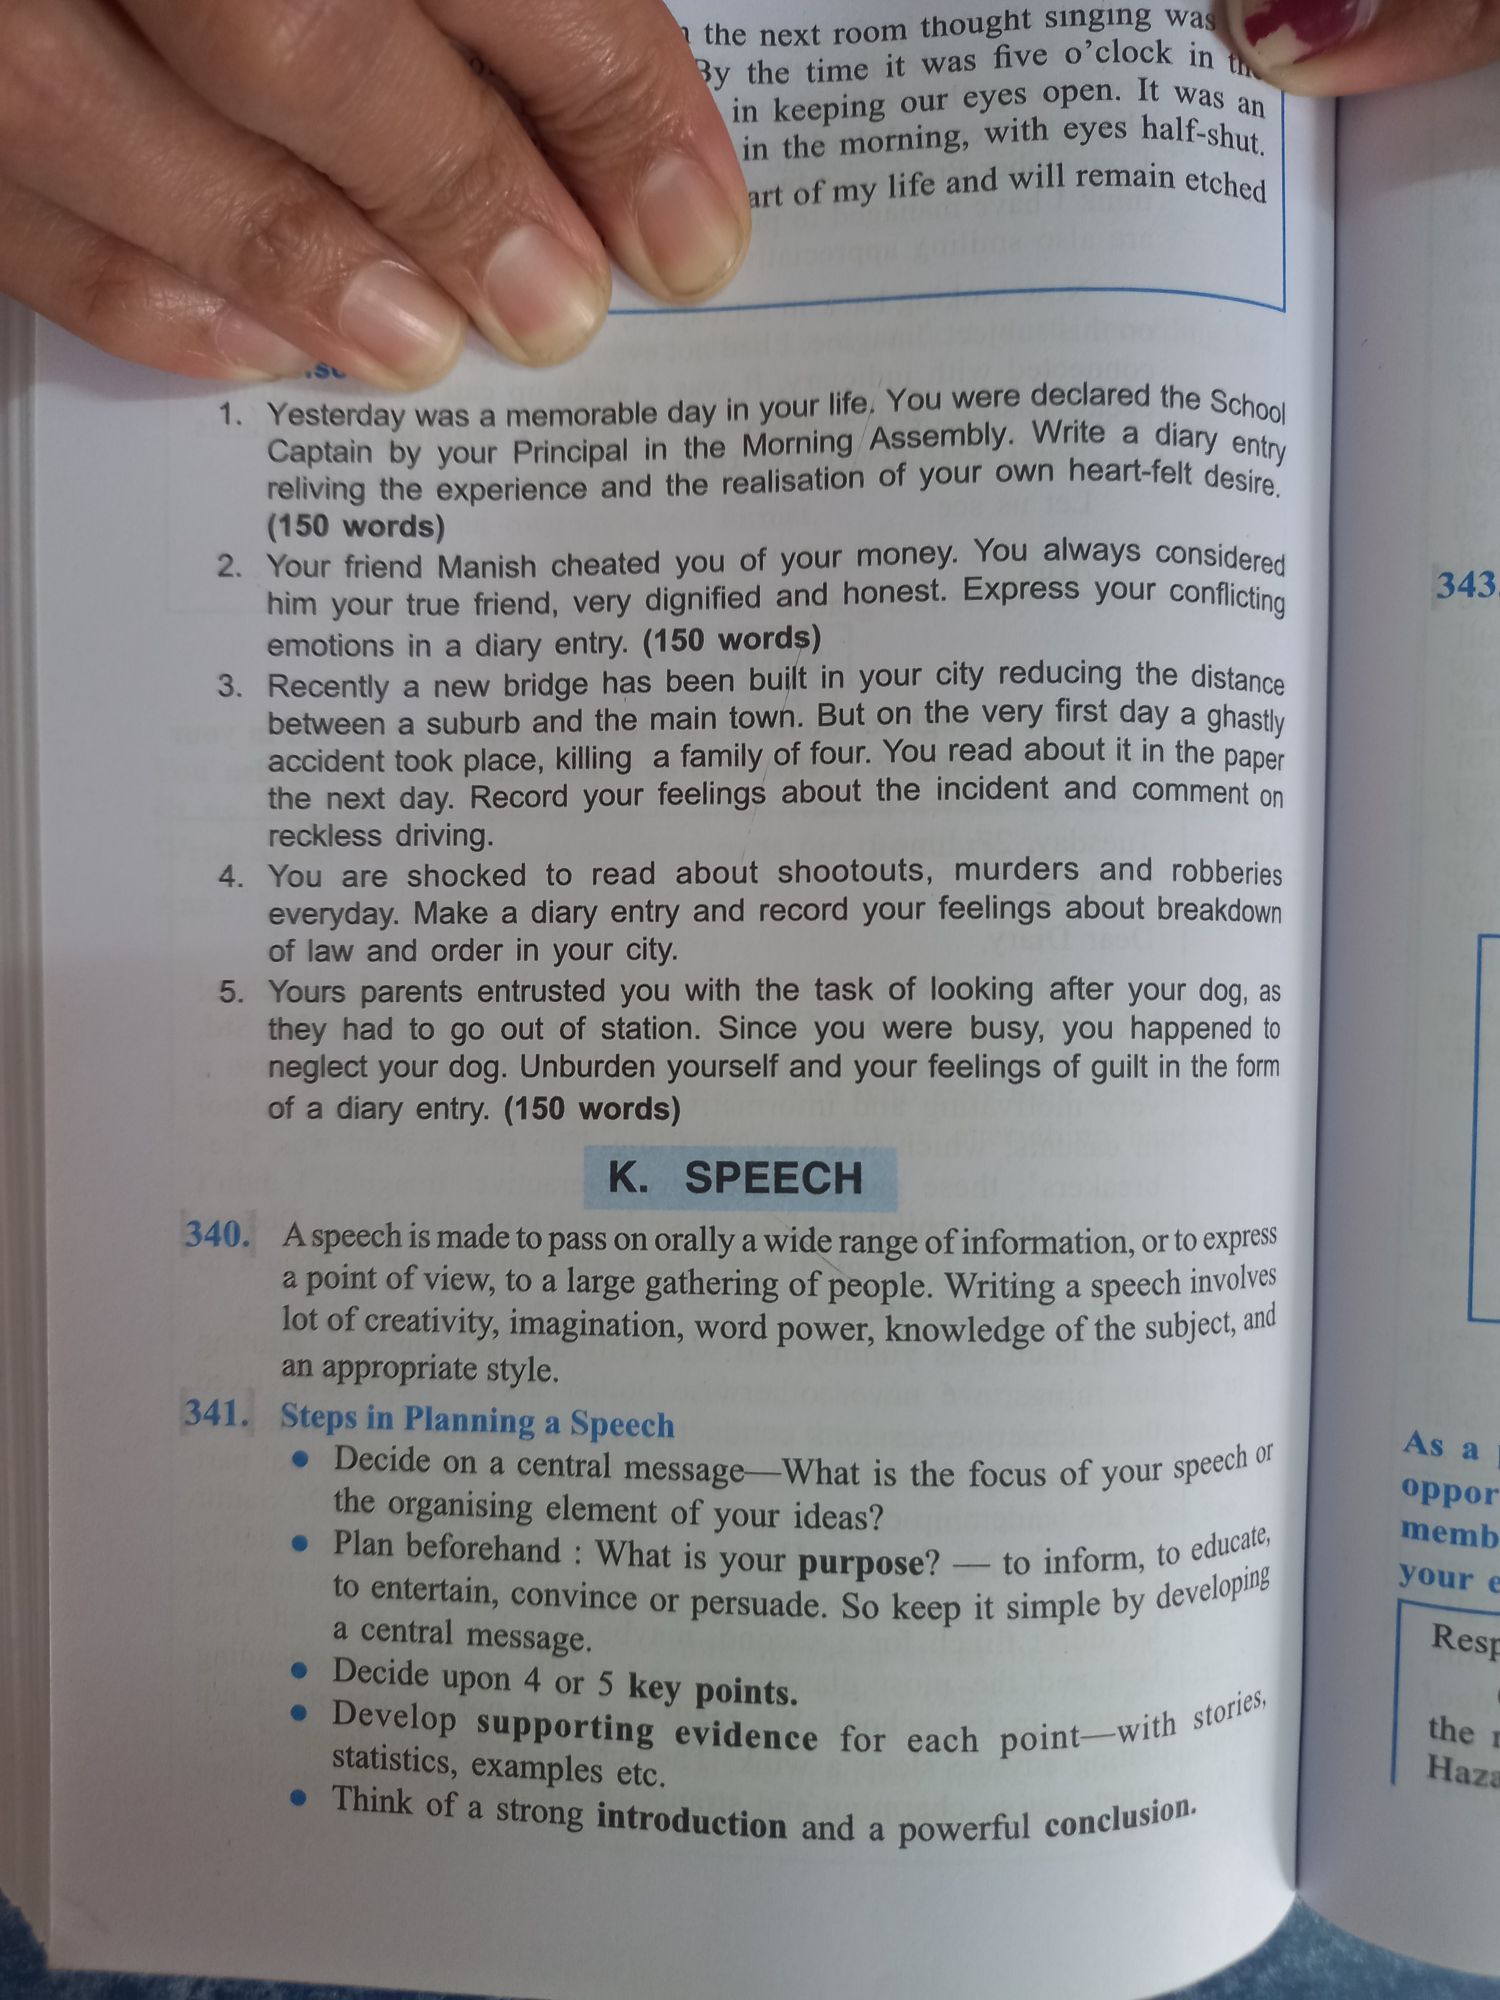 how to write a speech